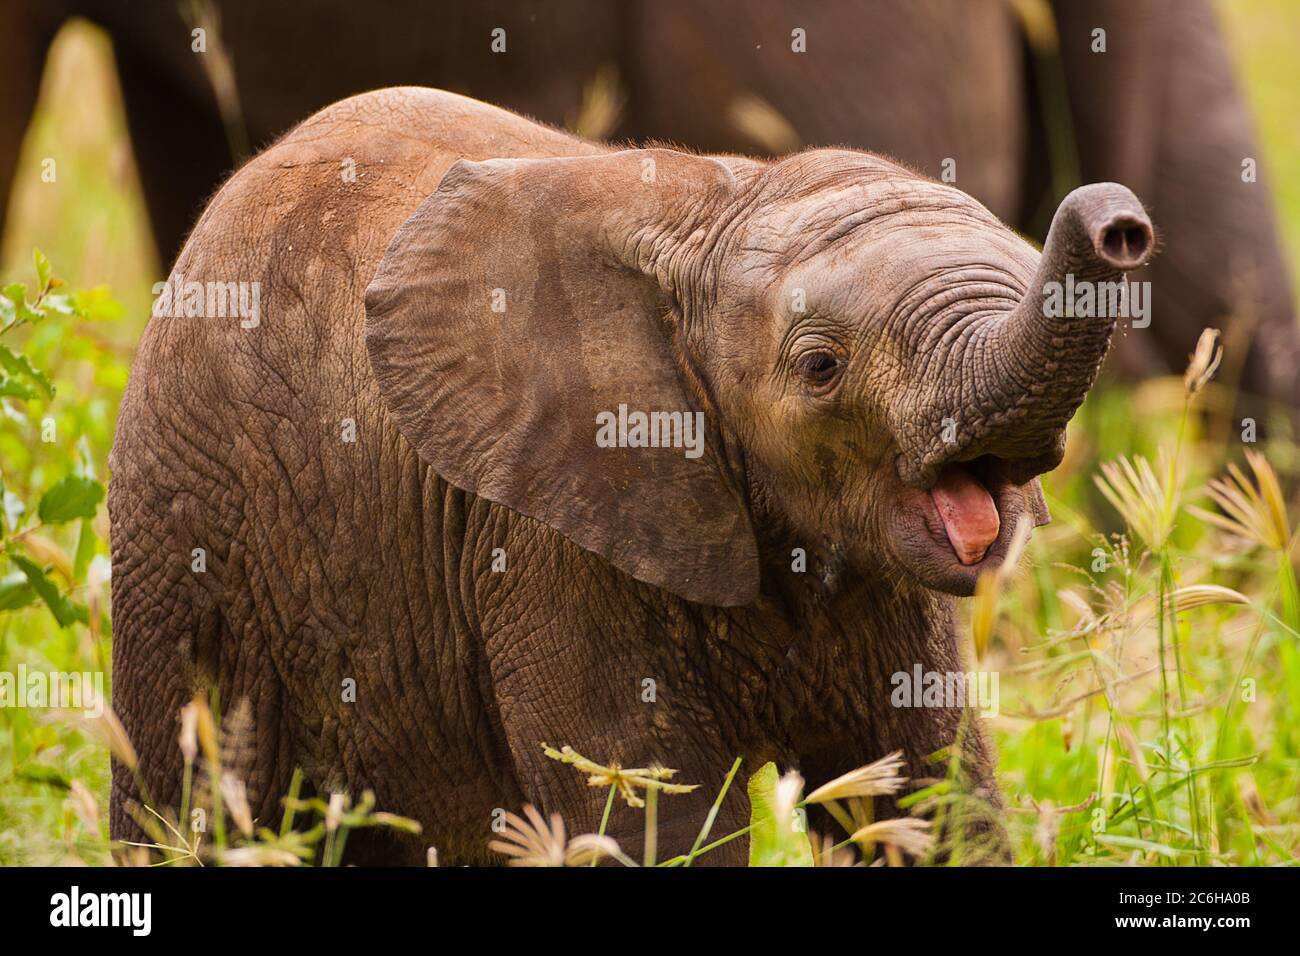 Juvenile African Bush Elephant (Loxodonta africana) as part of a herd Stock Photo